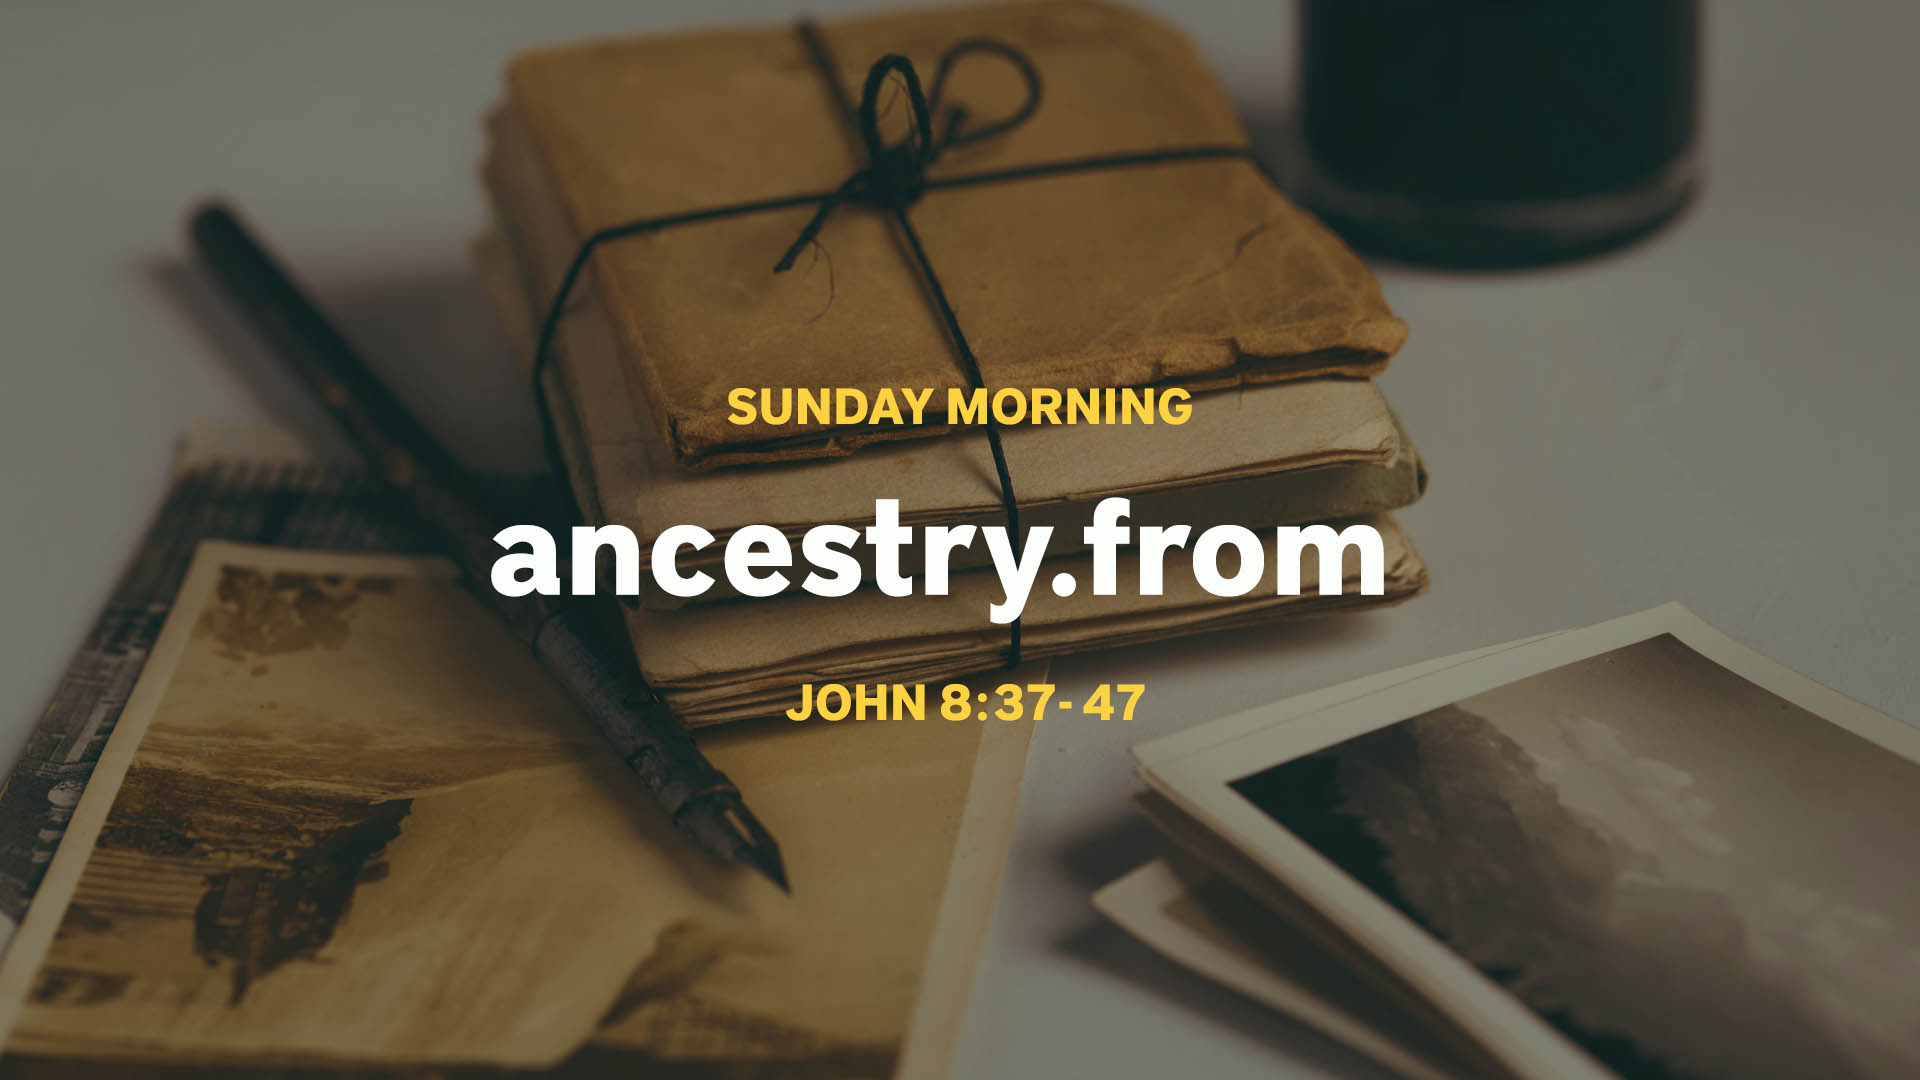 John 8:37-47<br />Ancestry.from